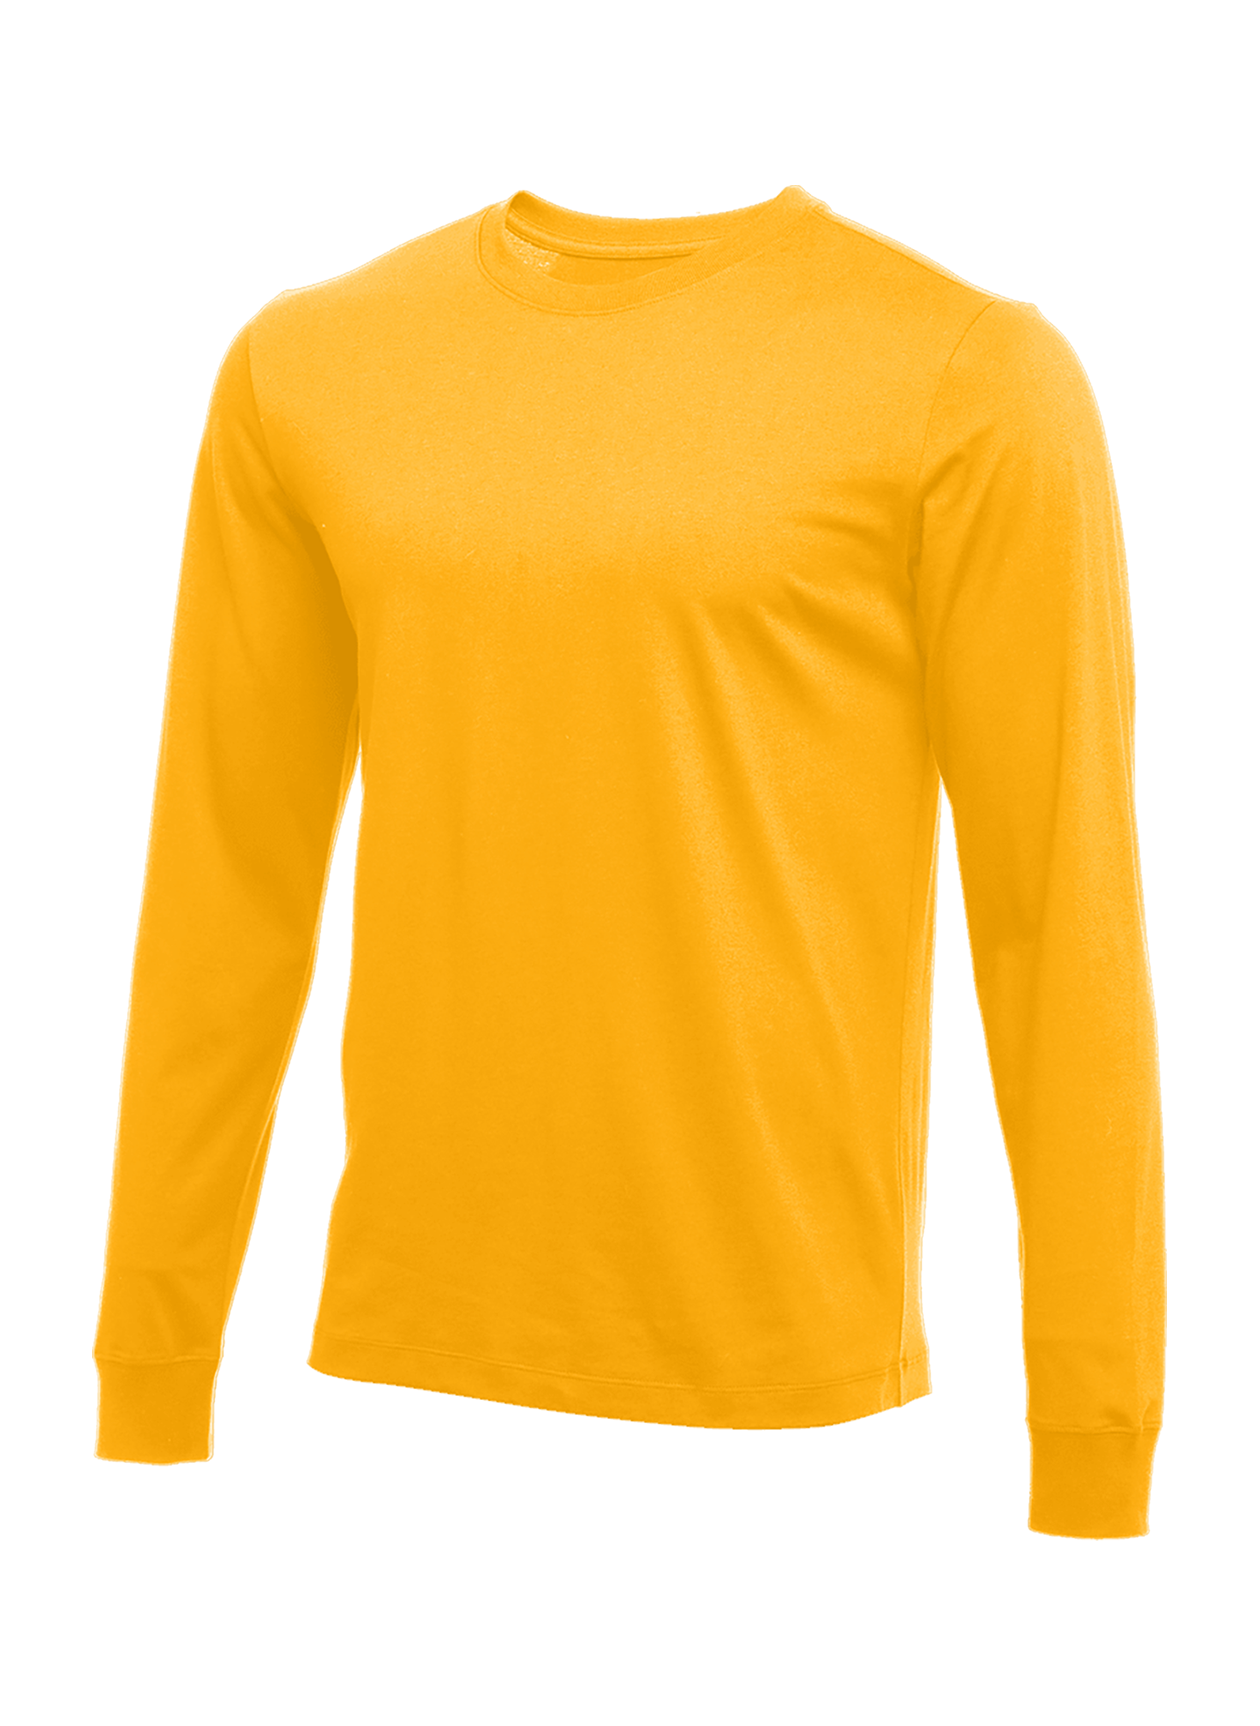 Nike Men's University Gold Long-Sleeve T-Shirt